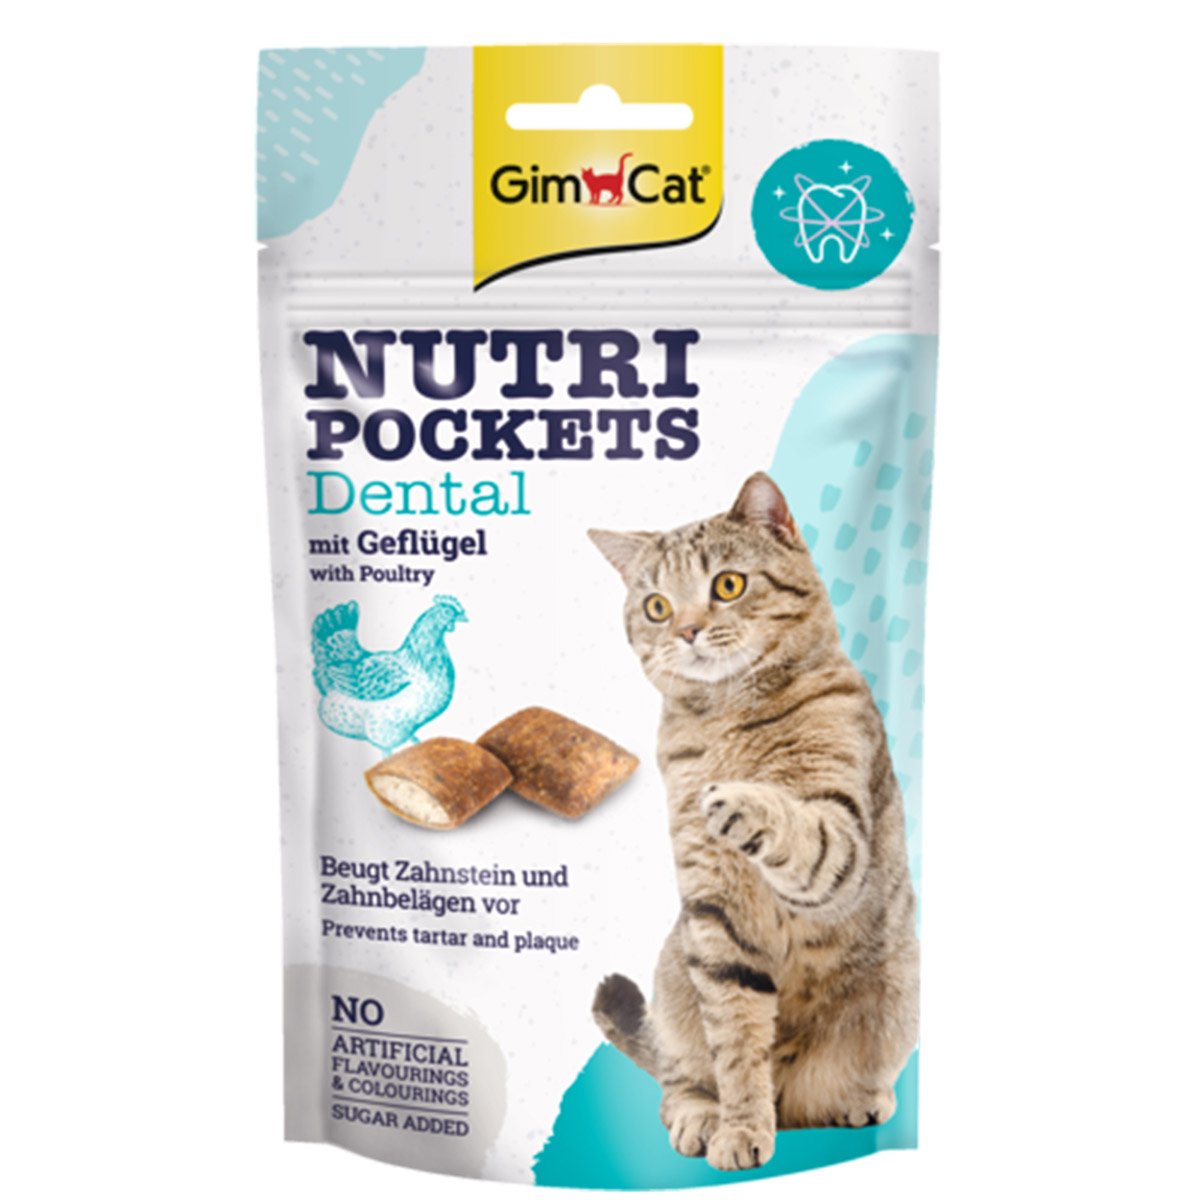 GimCat Nutri Pockets Dental 6x60g von Gimcat